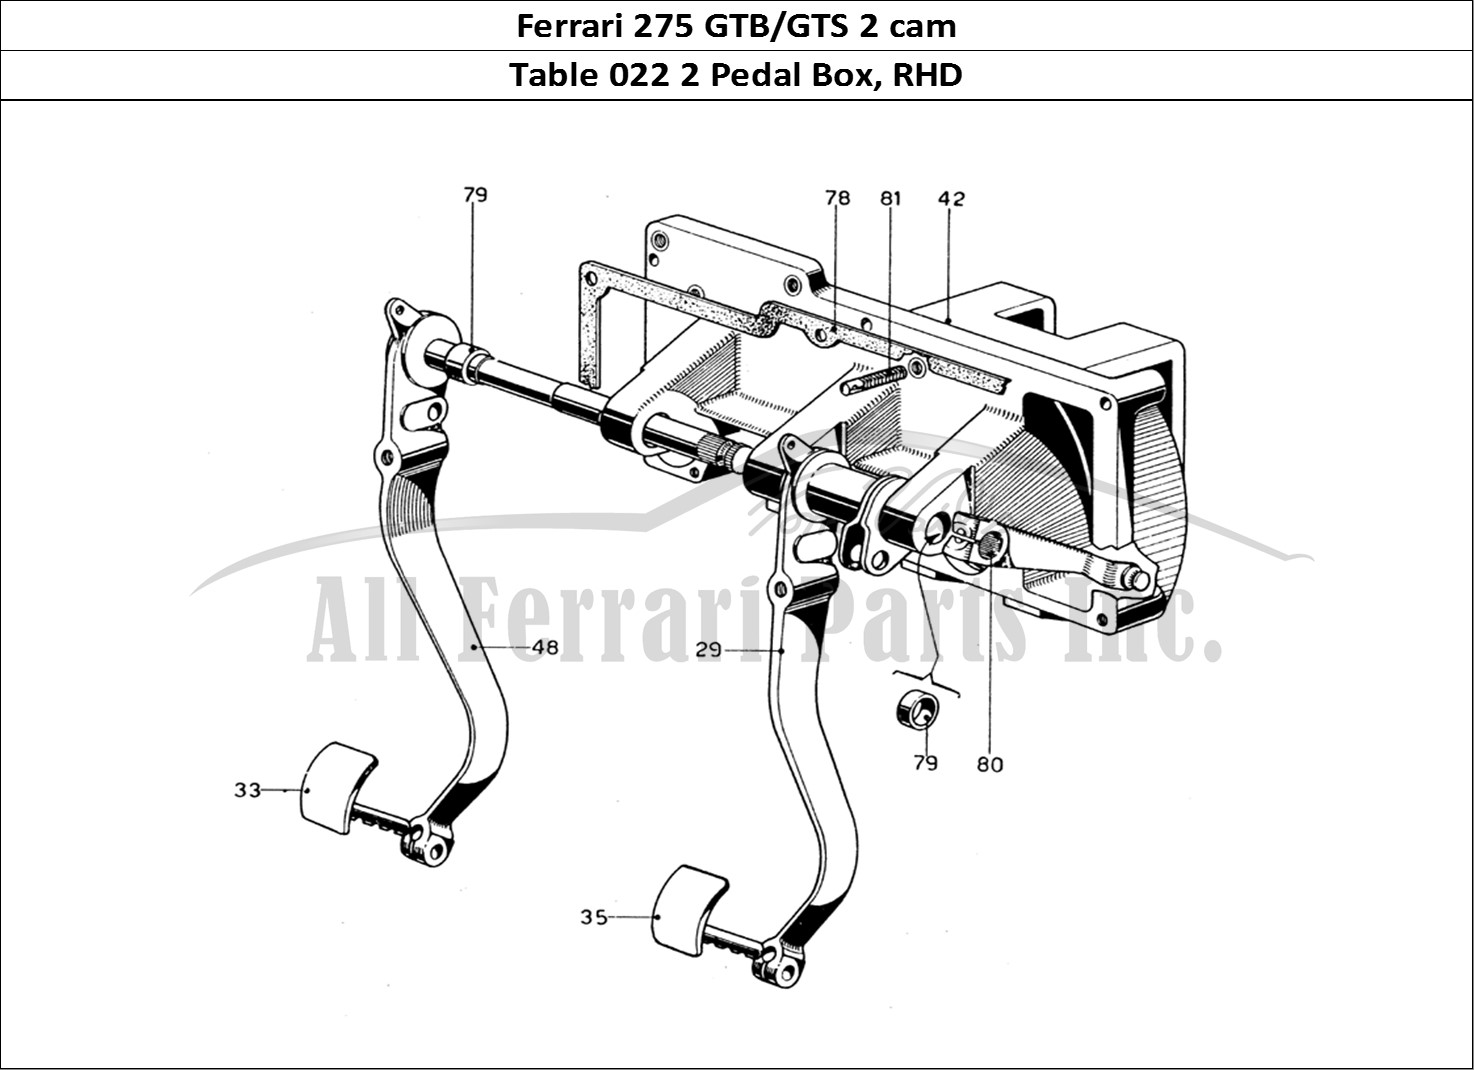 Ferrari Parts Ferrari 275 GTB/GTS 2 cam Page 022 Pedal Box - Right Hand Dr